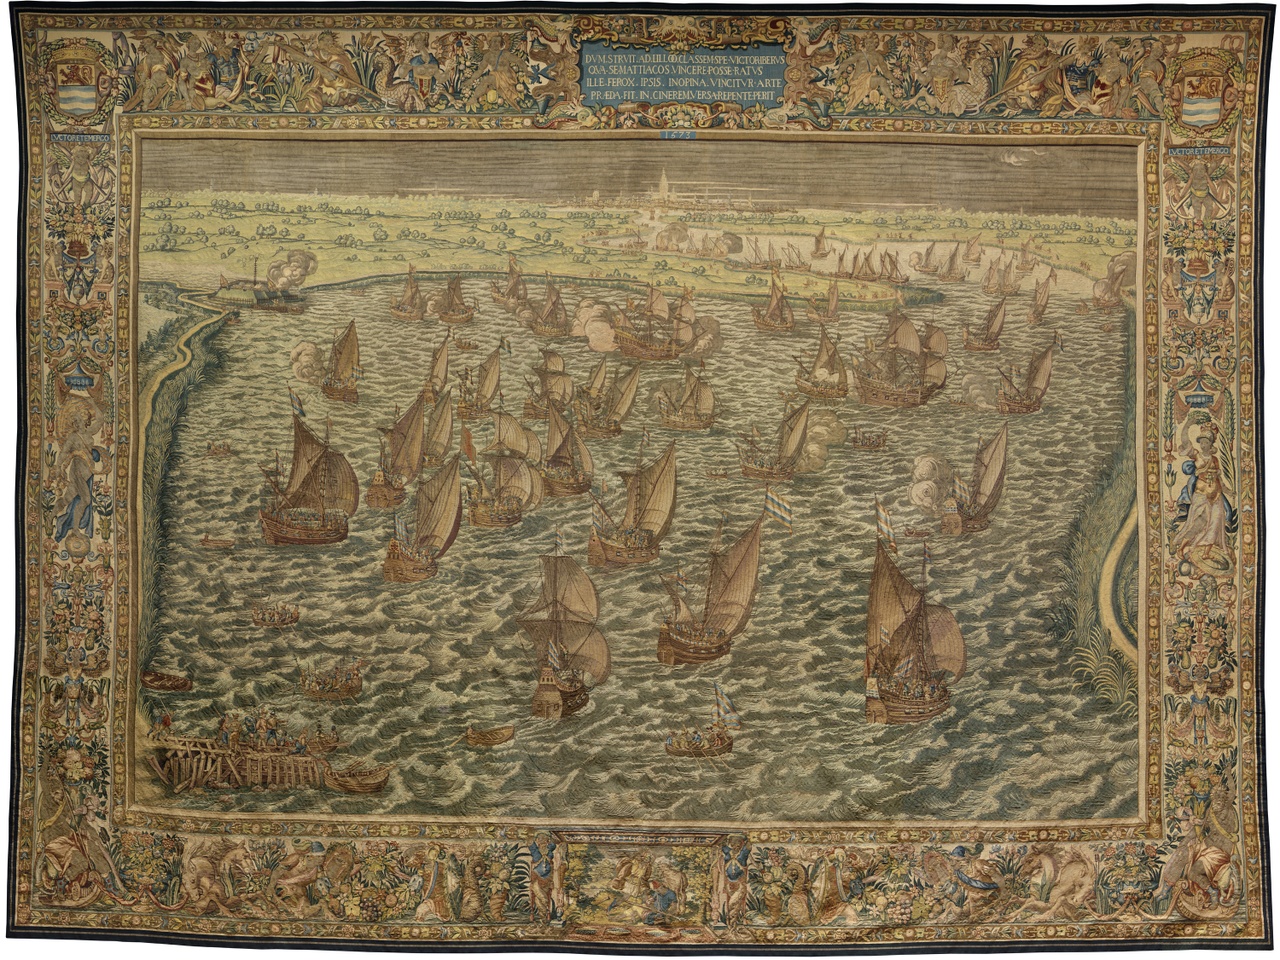 Wandtapijt Slag bij Lillo 23 februari - 16 maart 1573